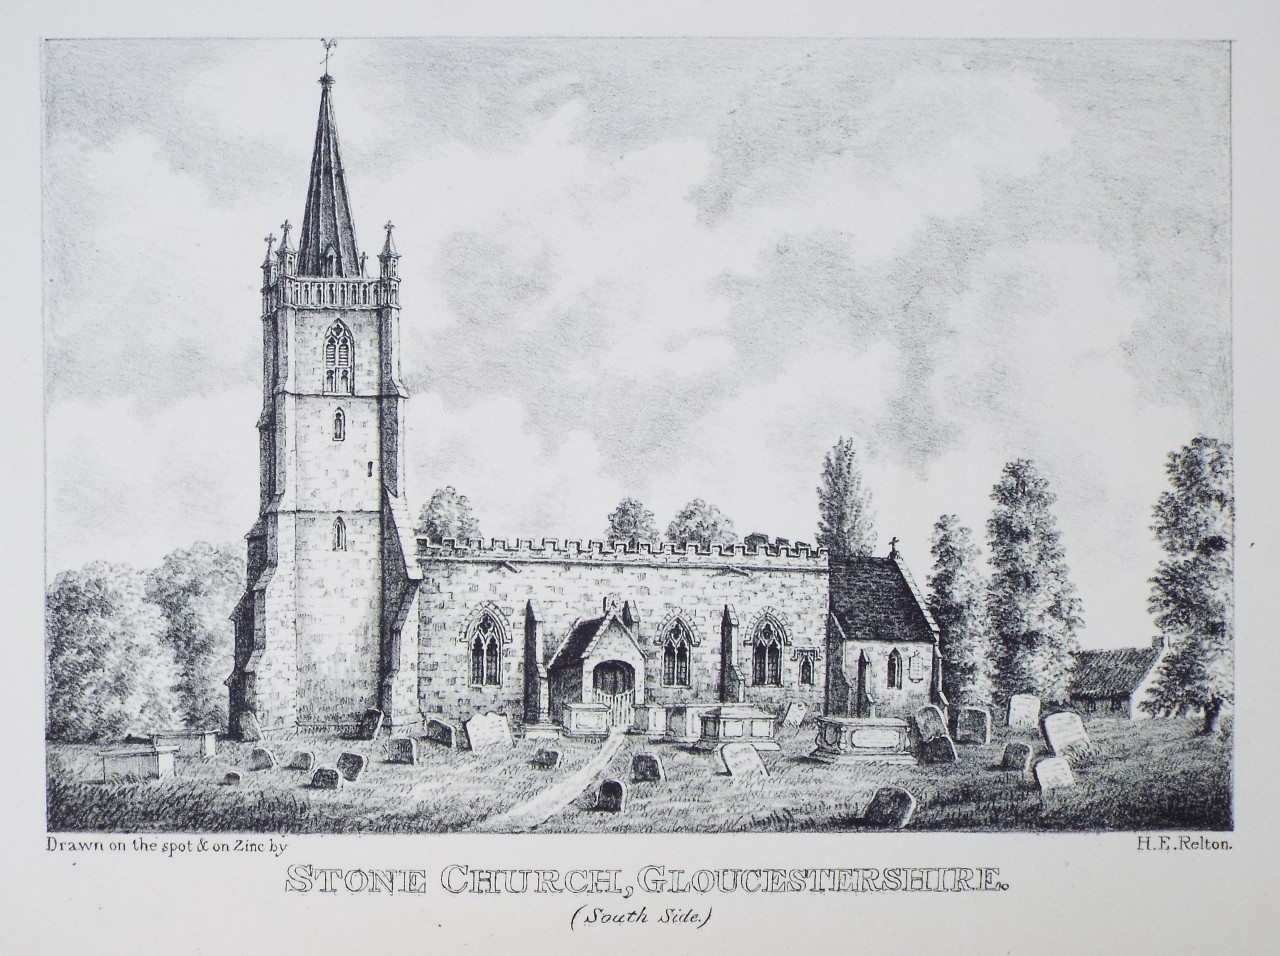 Zinc Lithograph - Stone Church, Gloucestershire. (South Side.) - Relton